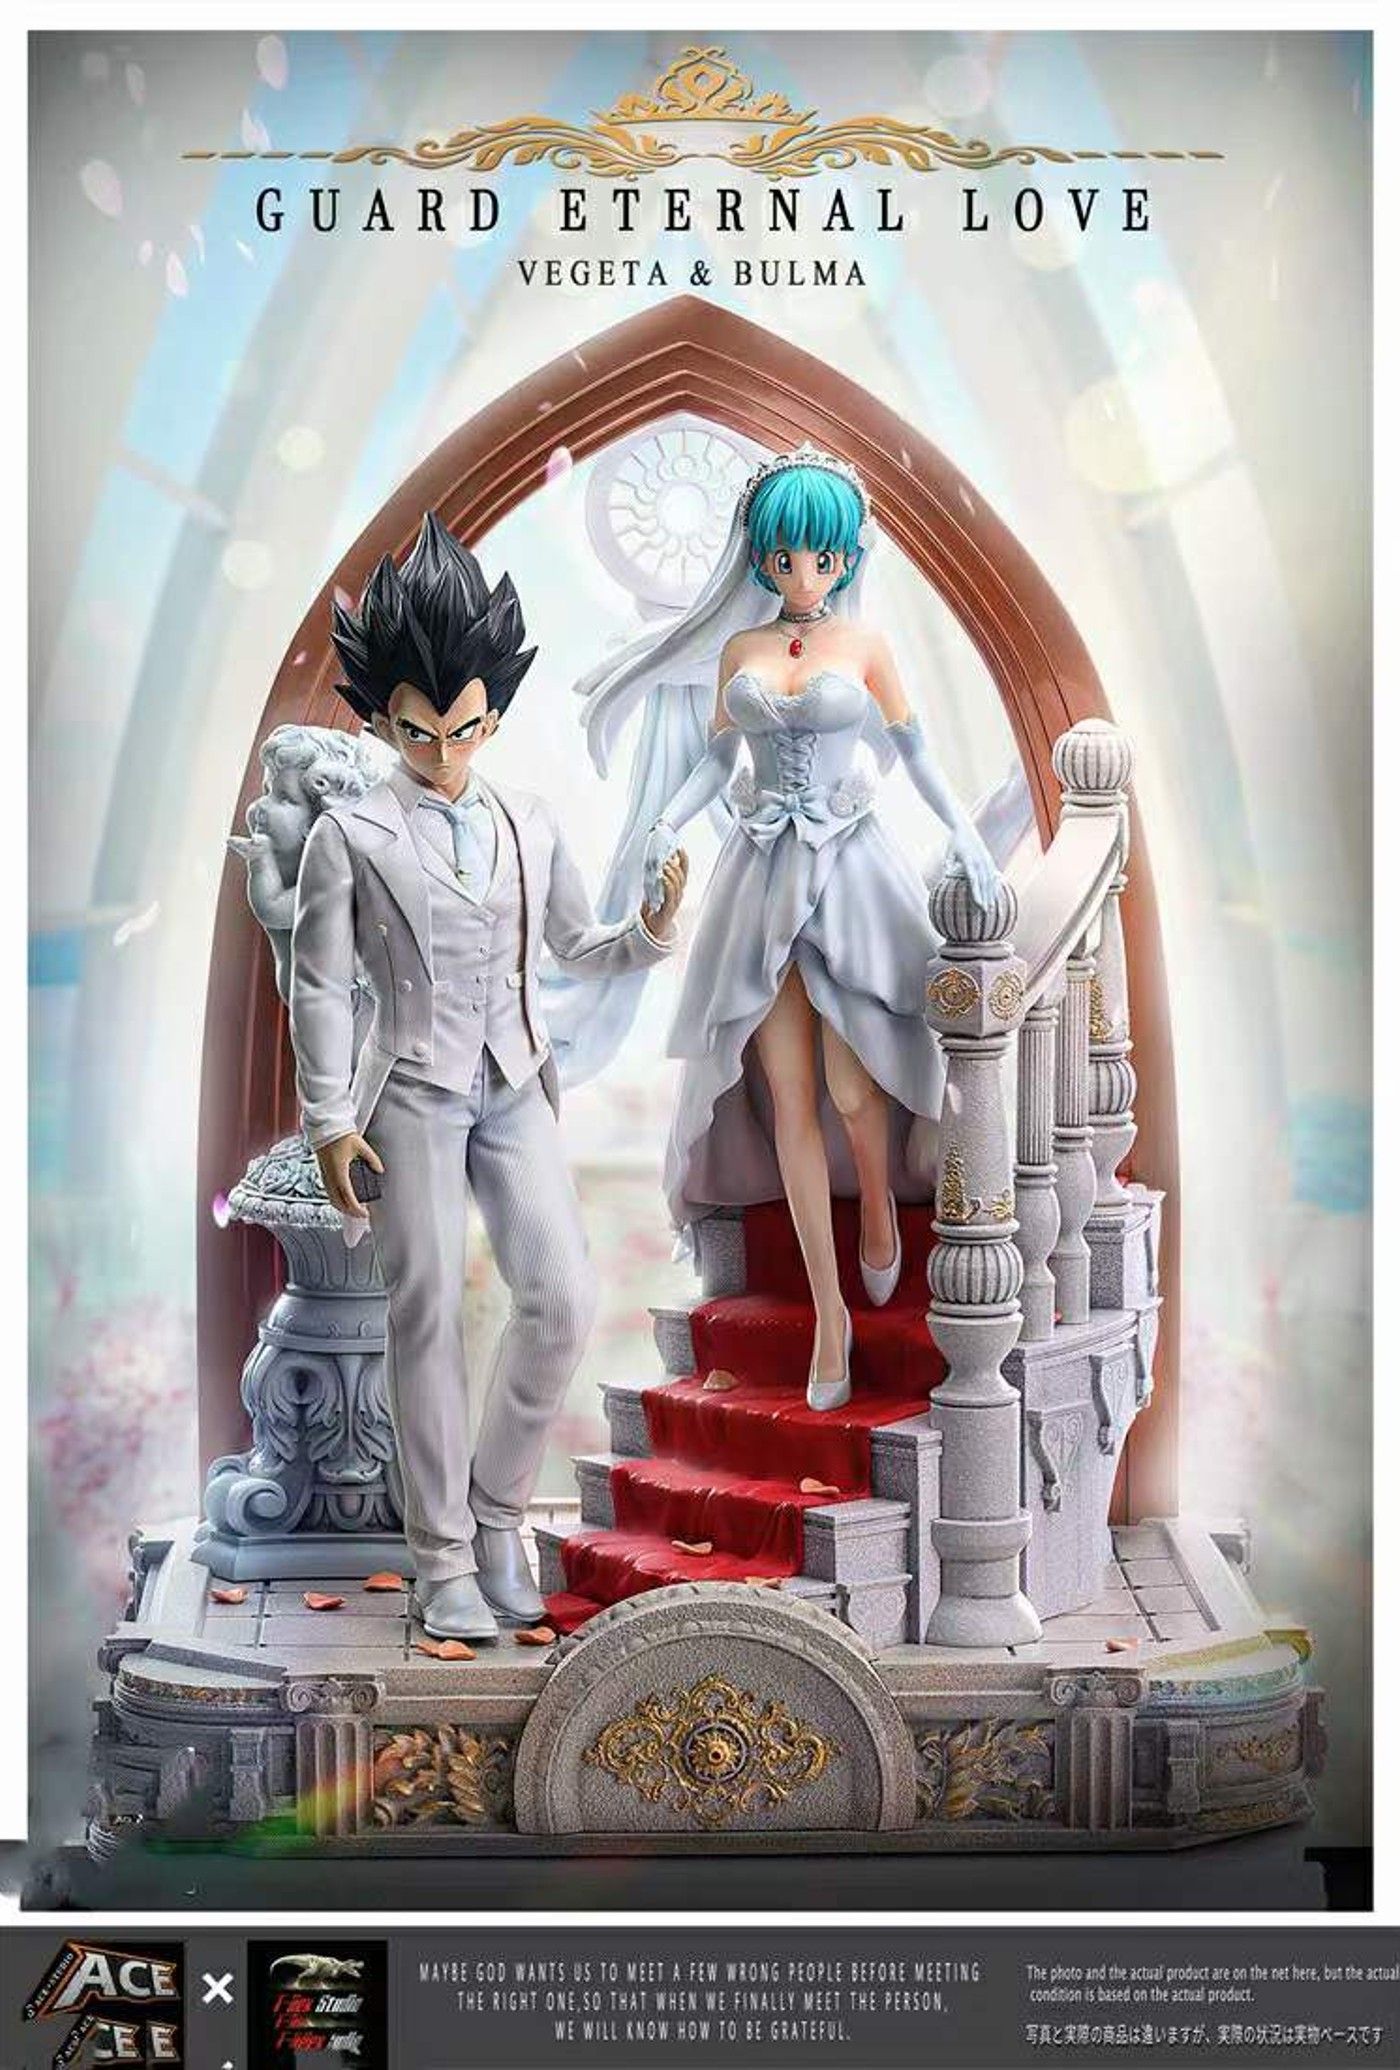 Vegeta & Bulma’s Dragon Ball Wedding is Gorgeous in Perfect New Statue